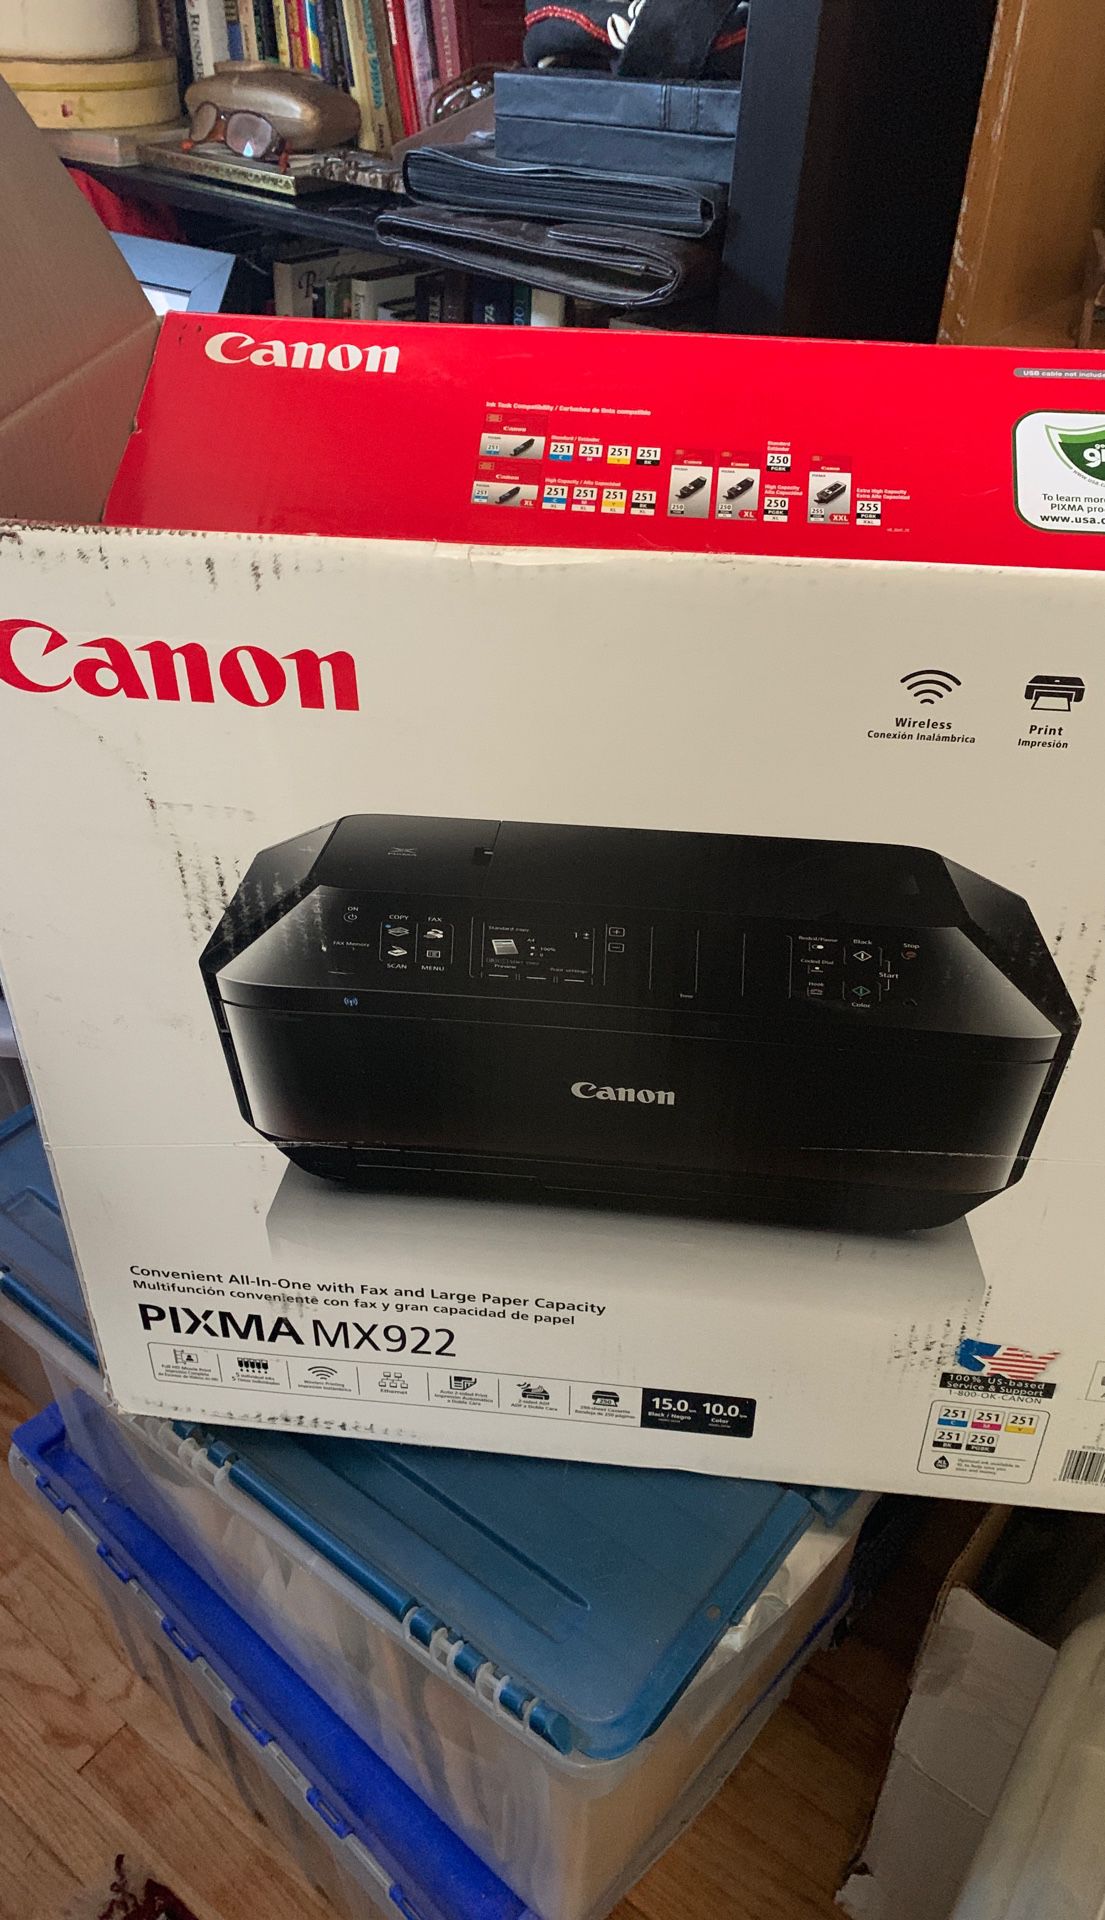 Canon Wireless Print copy scan fax